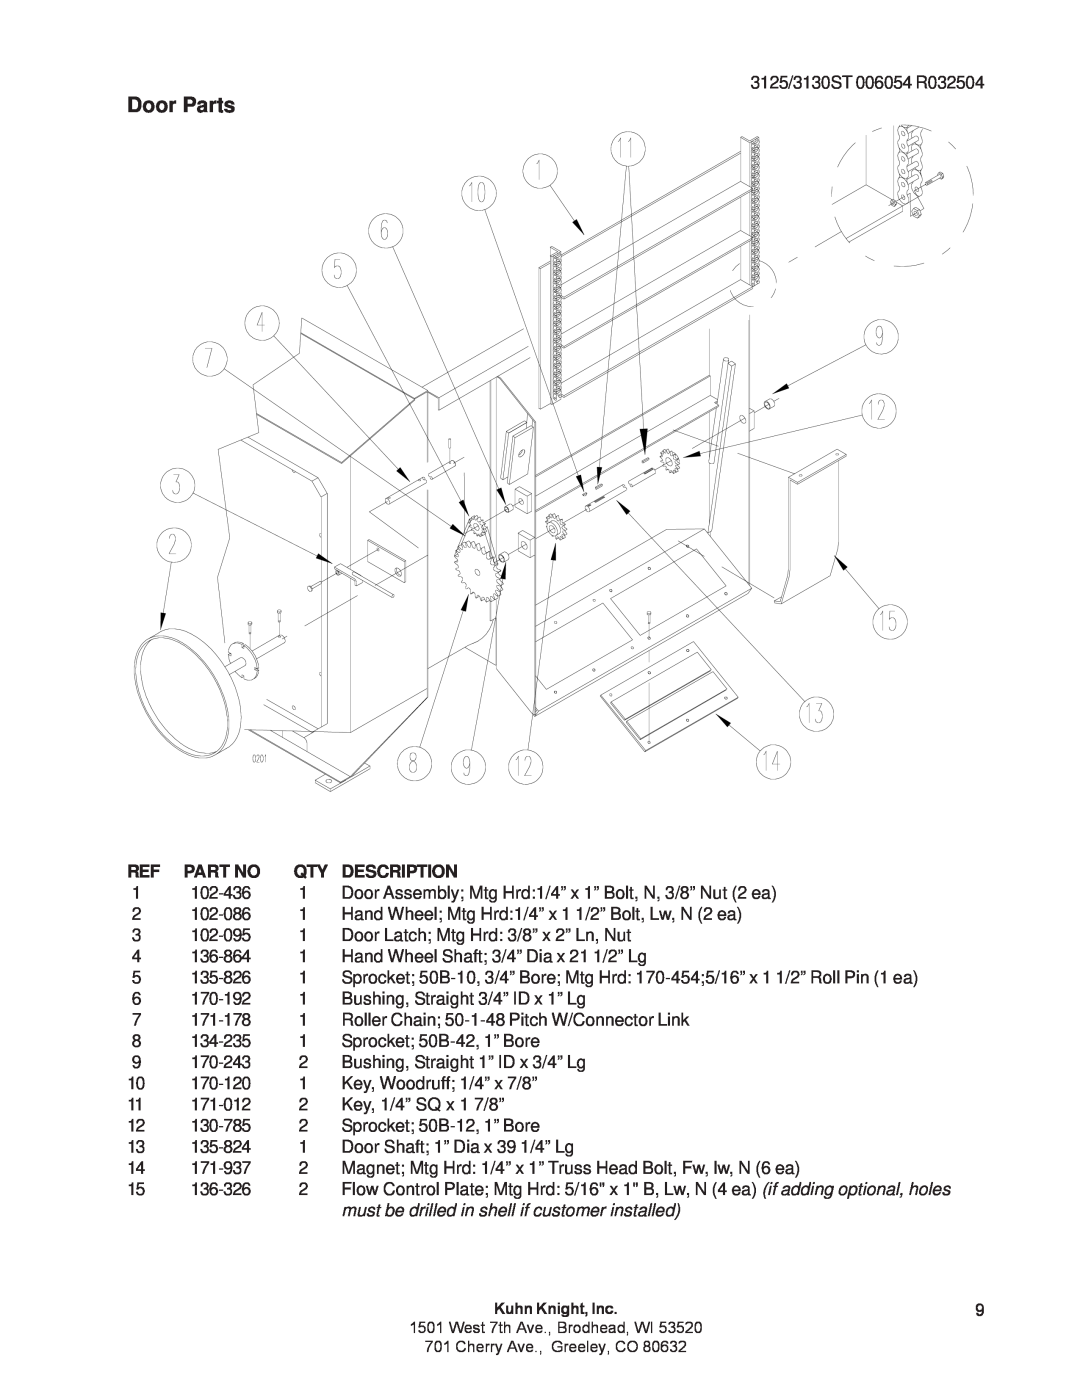 Kuhn Rikon 3125, 3130 instruction manual Door Parts, Description 